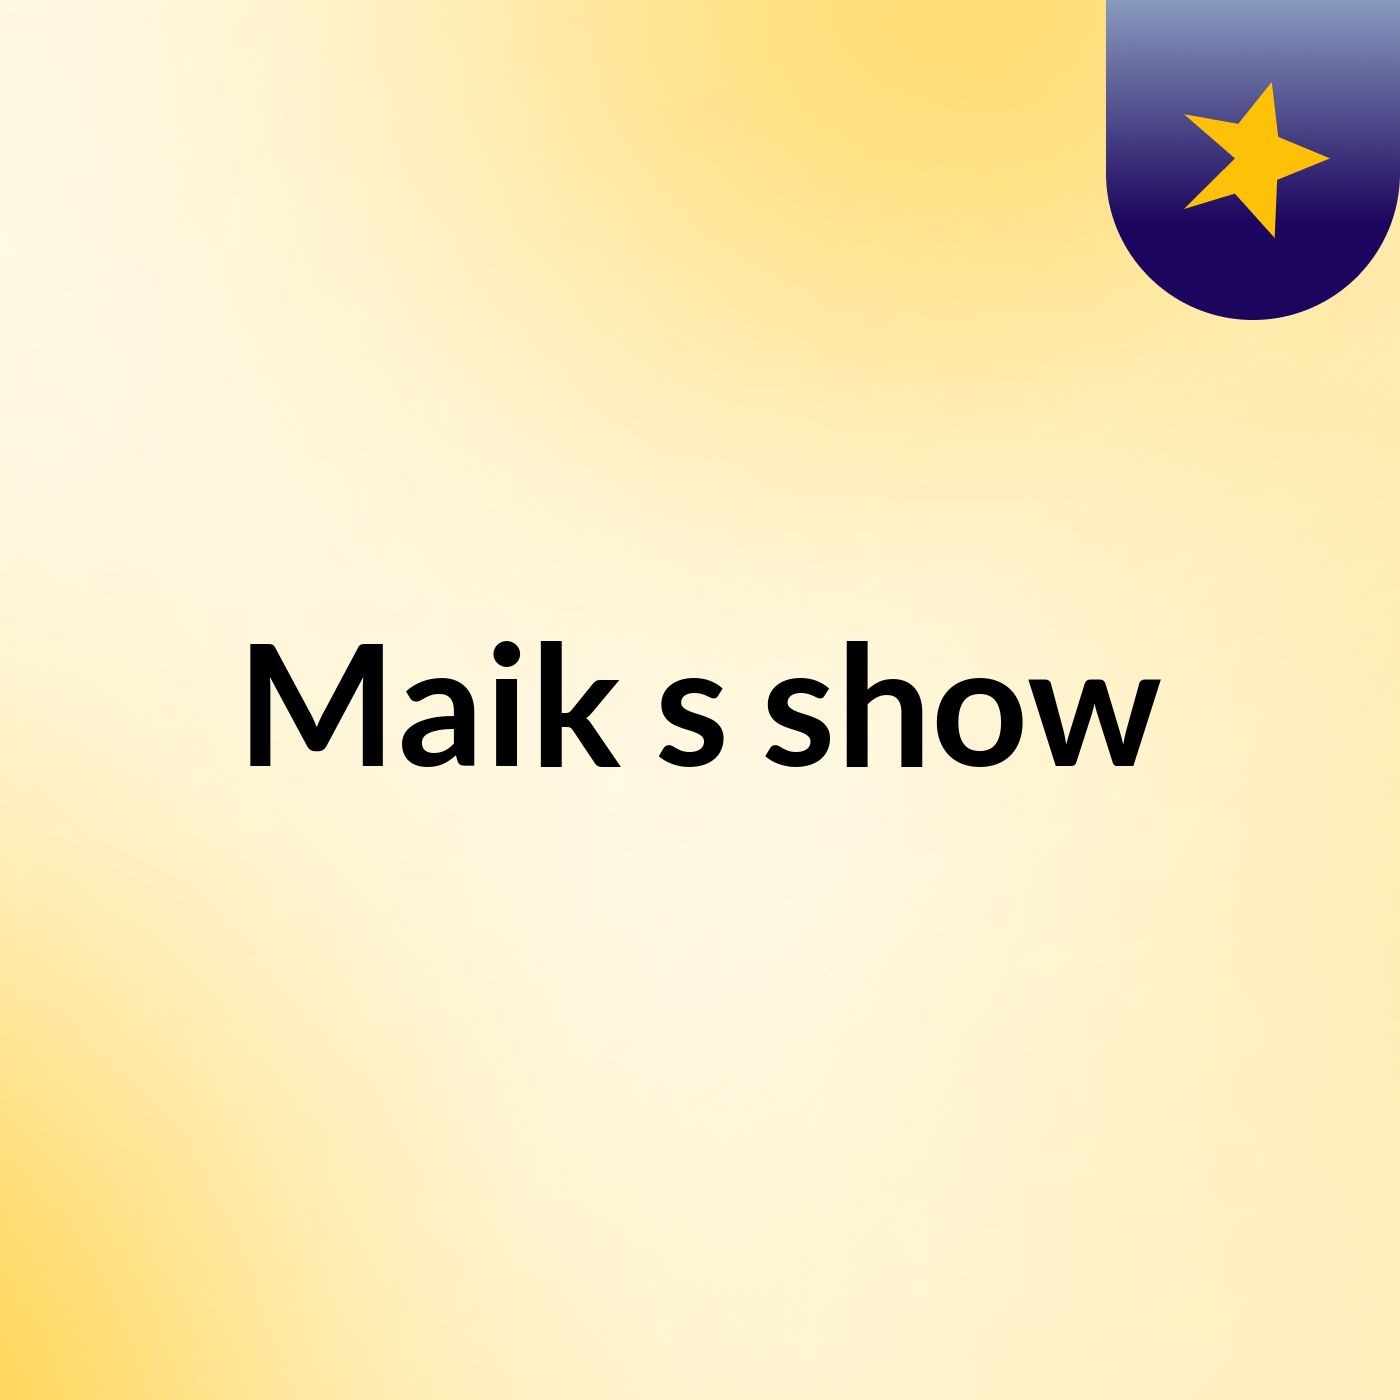 Maik's show